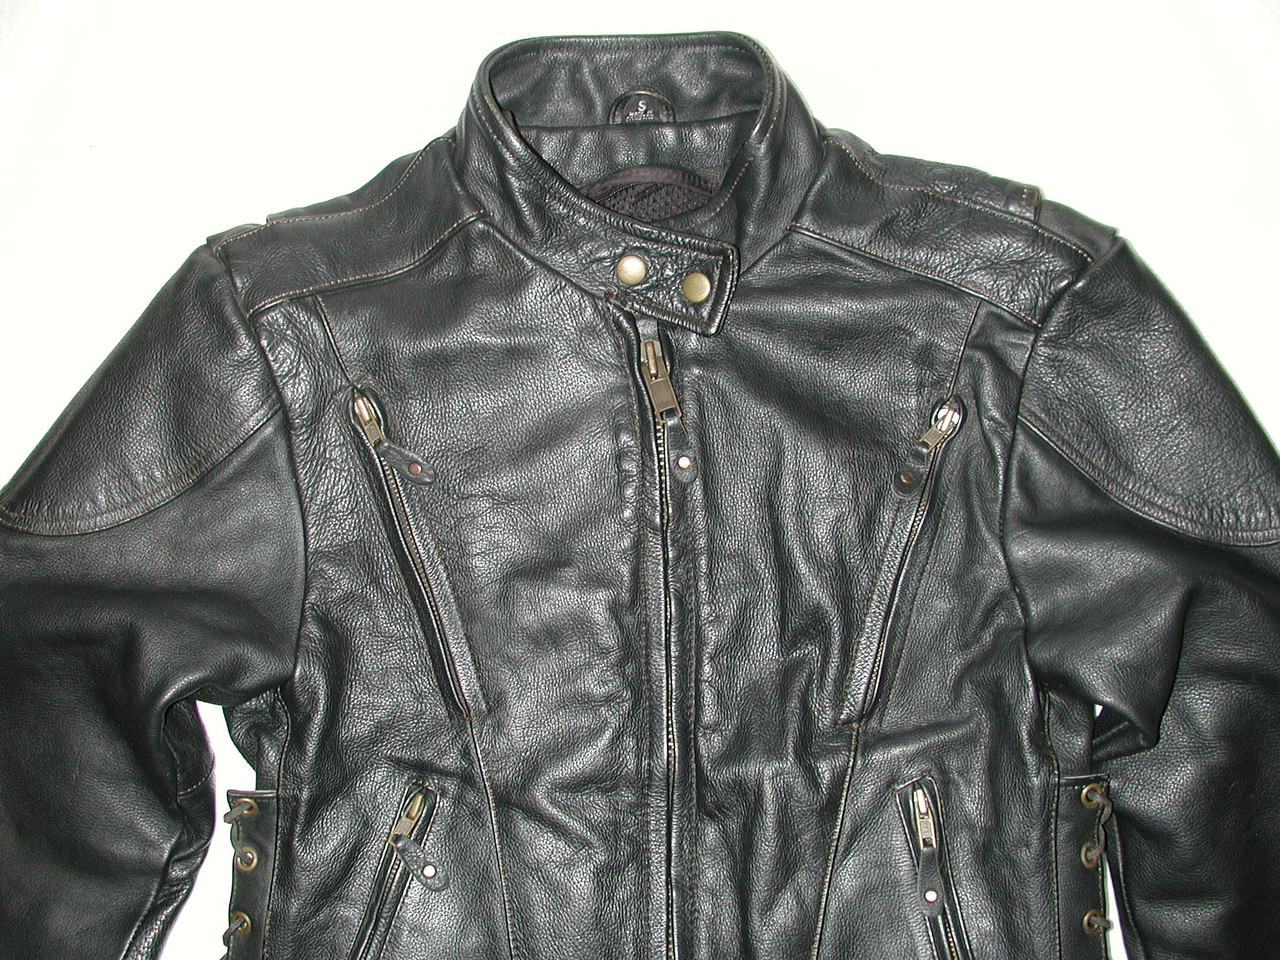 Motorcycle Leather Jacket Women Size S